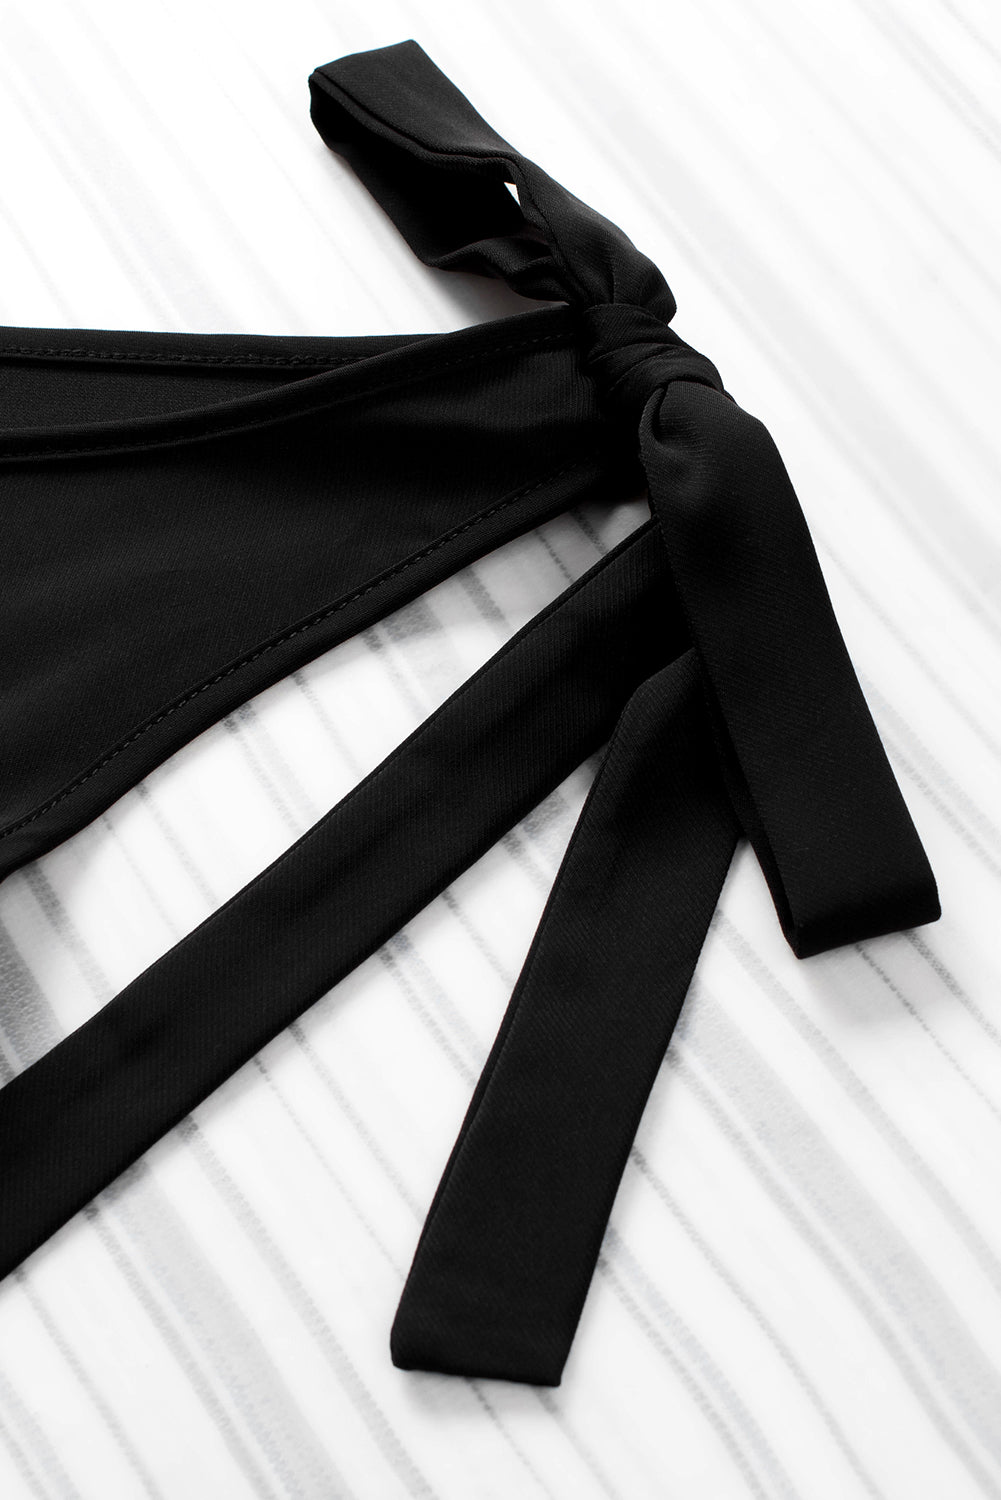 Crna majica s kravatom na ramenima i V izrezom